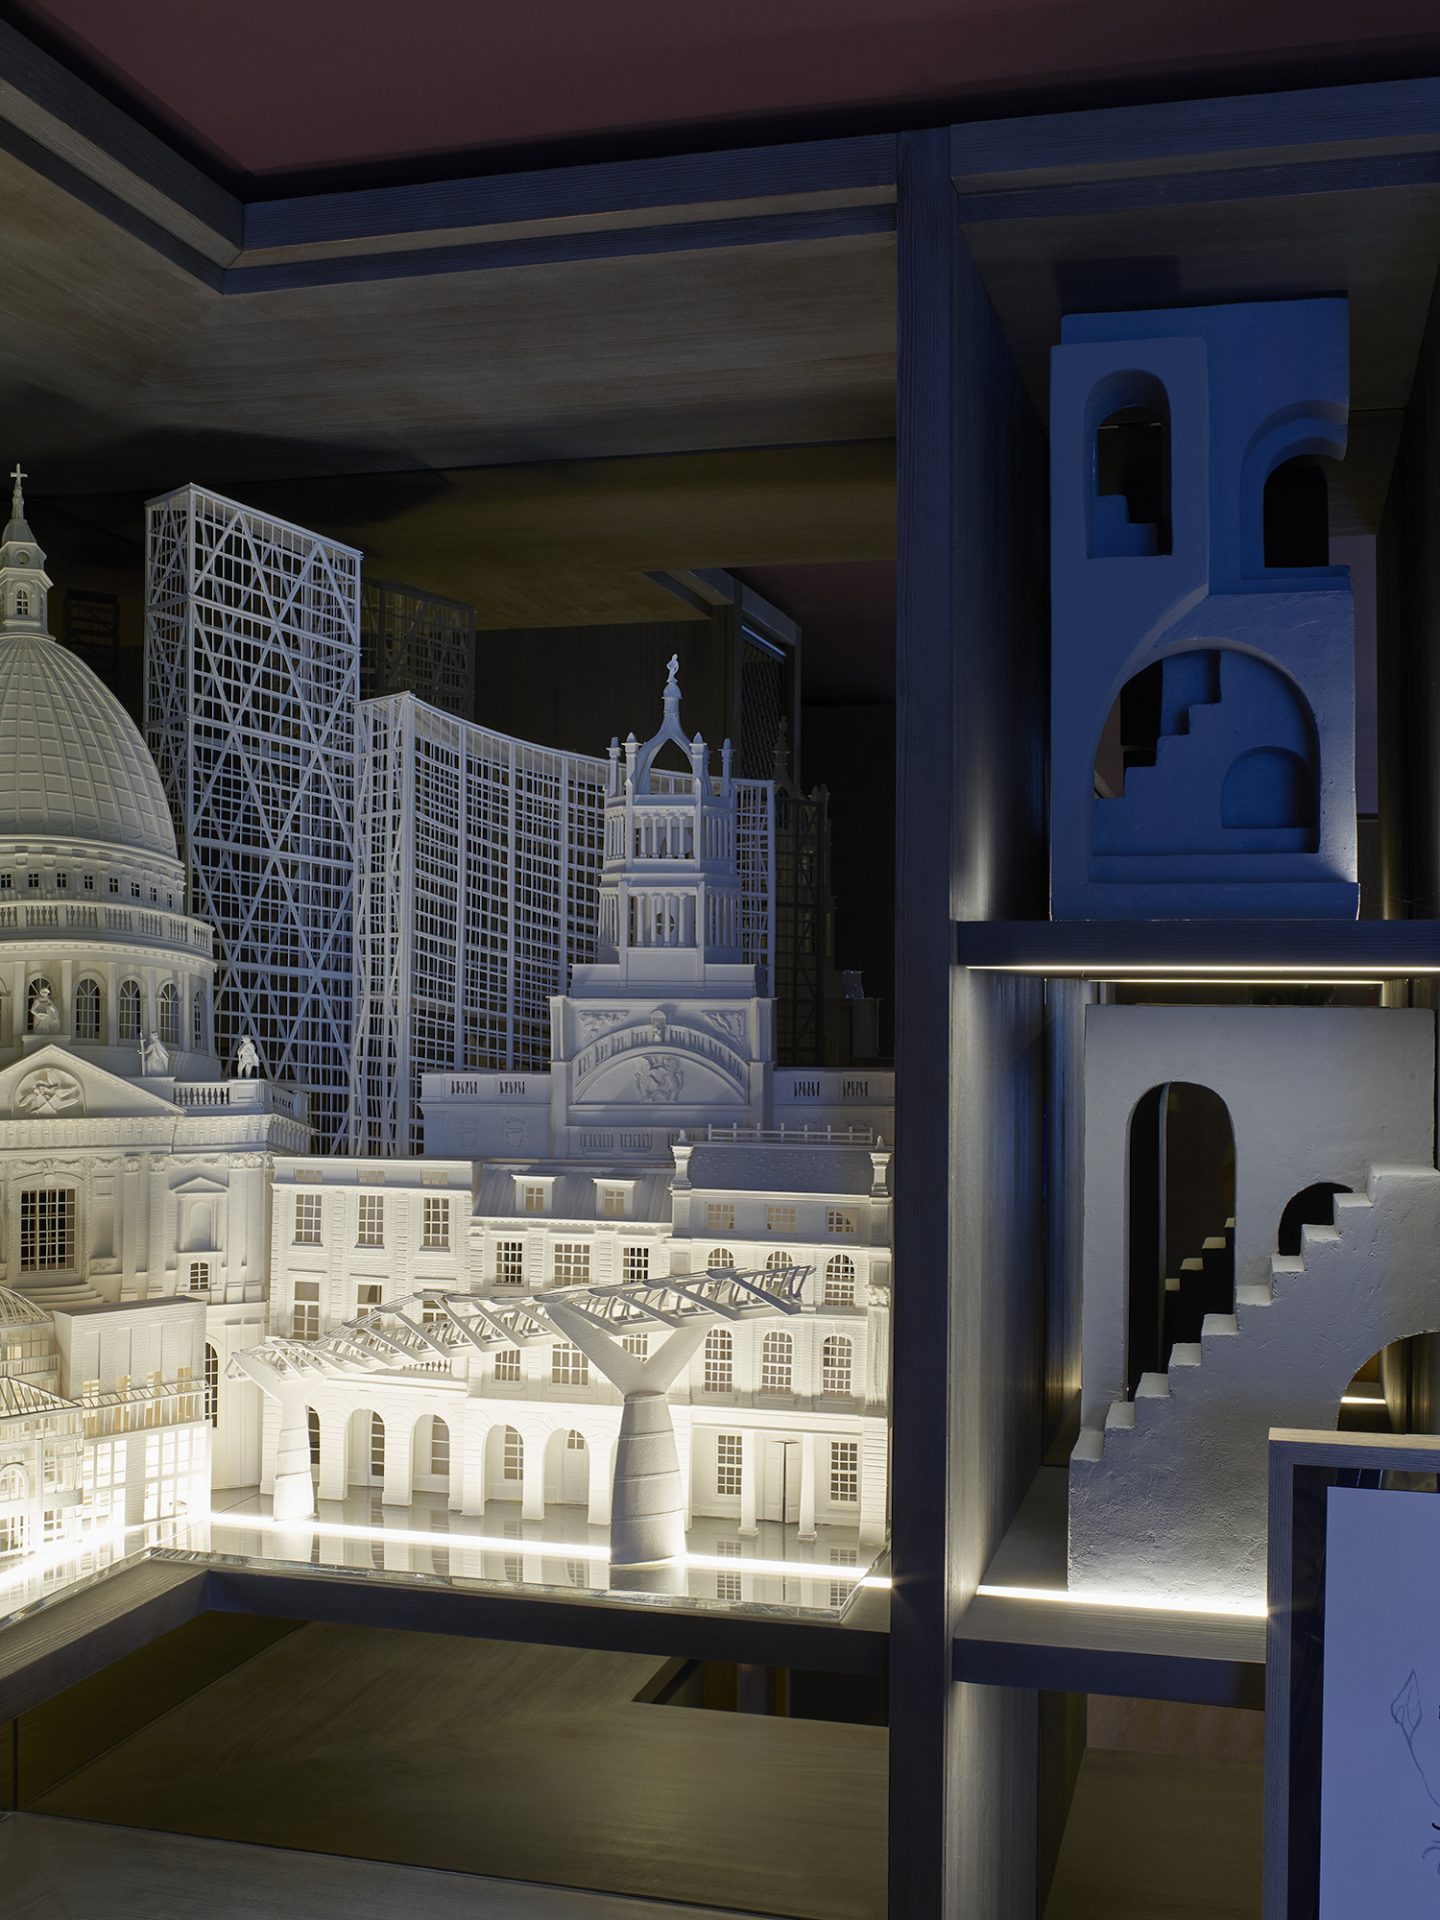 A model plan of London inside The Londoner